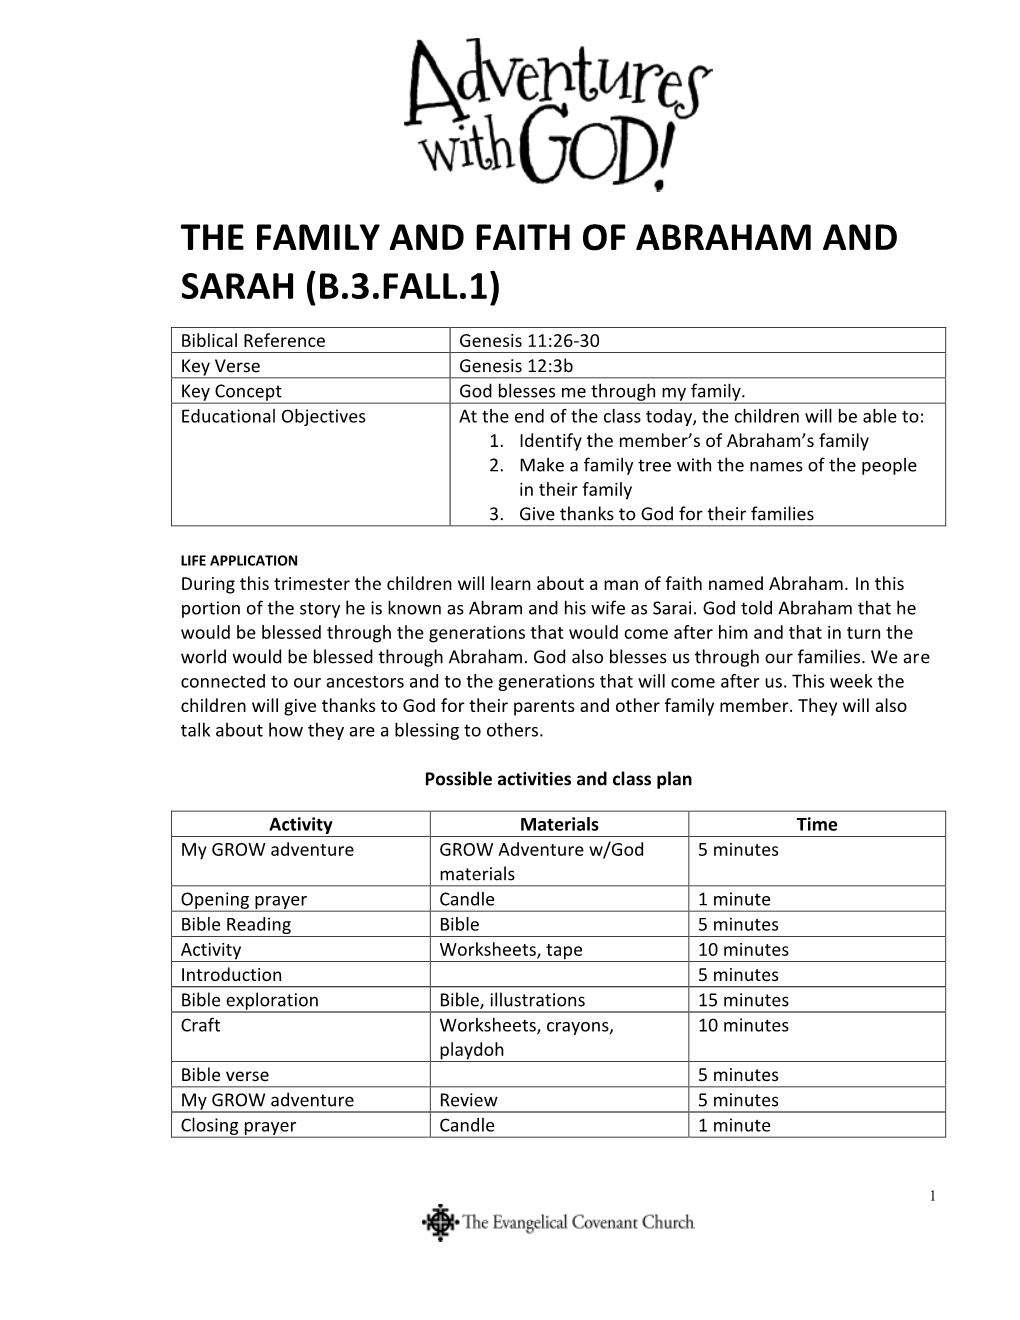 The Family and Faith of Abraham and Sarah (B.3.Fall.1)